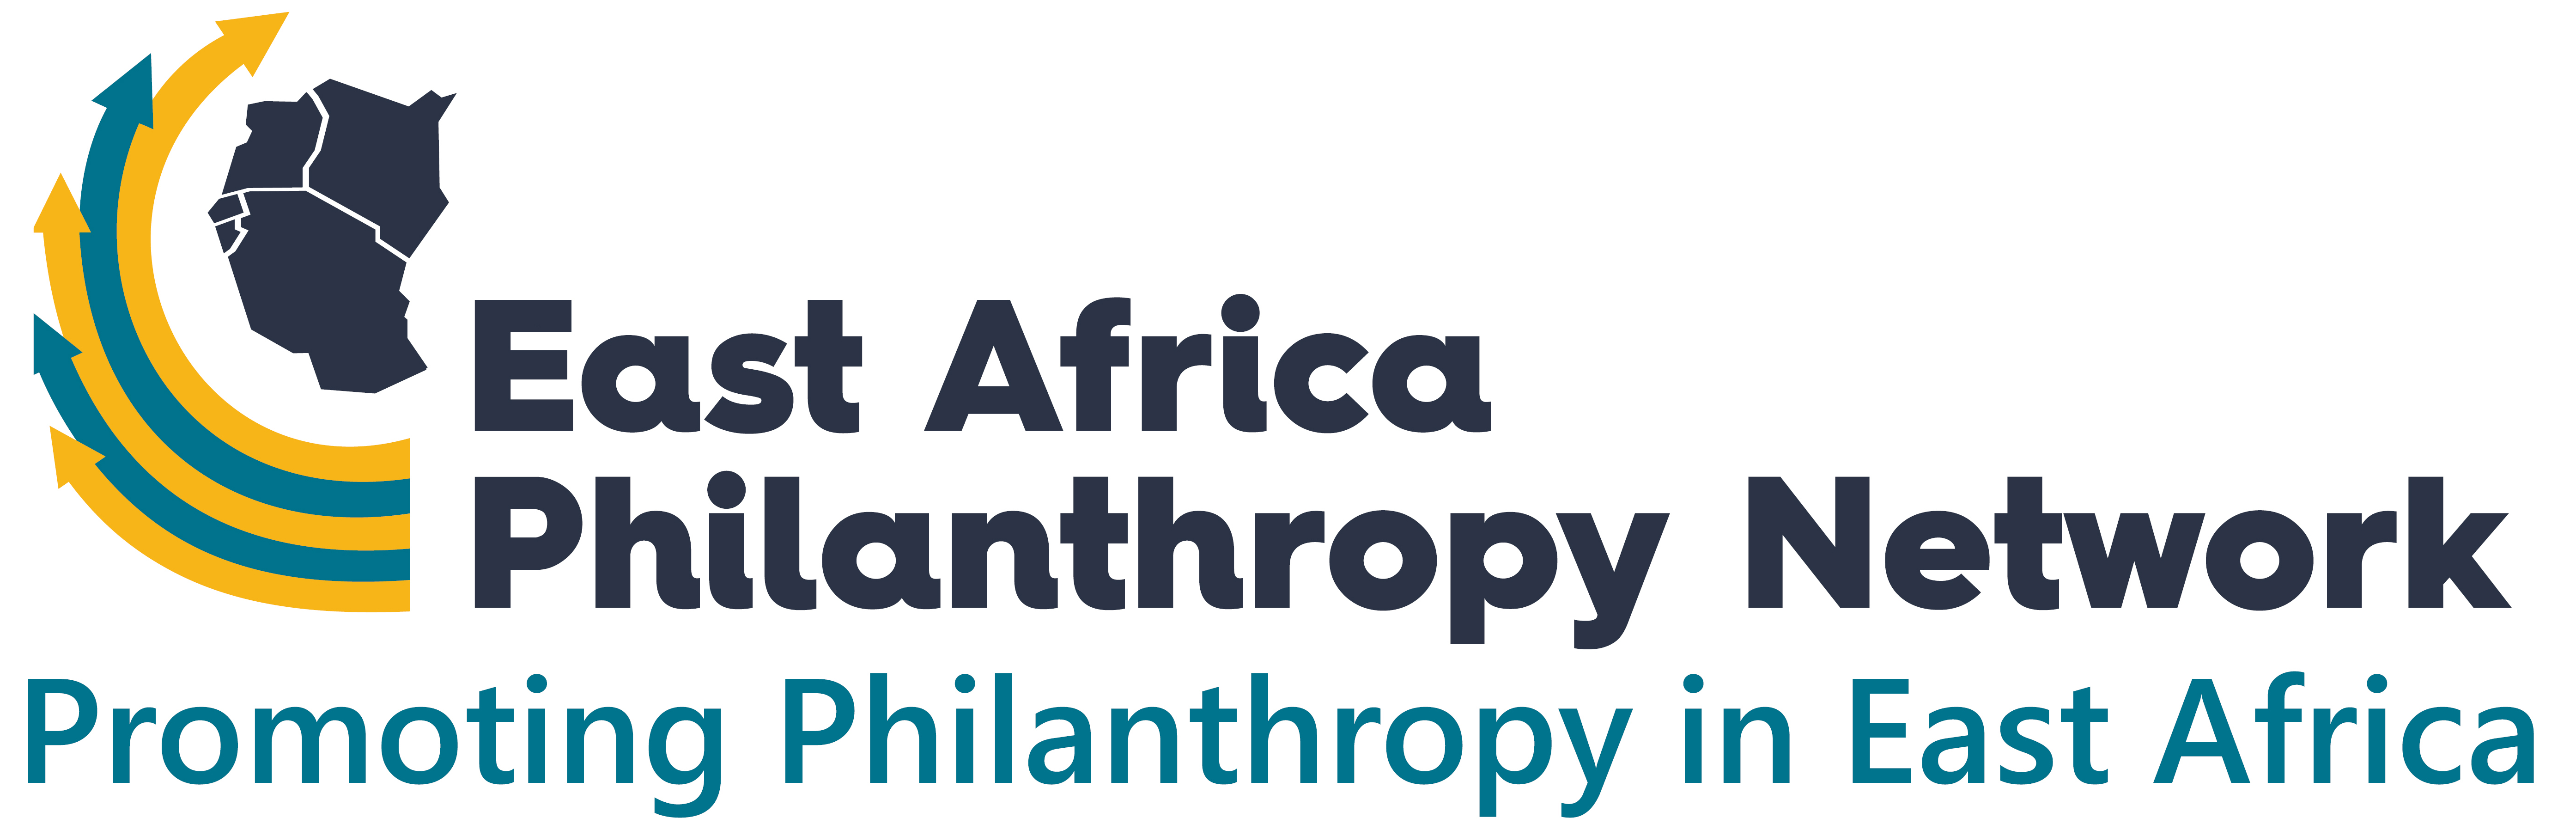 East Africa Philanthropy Network